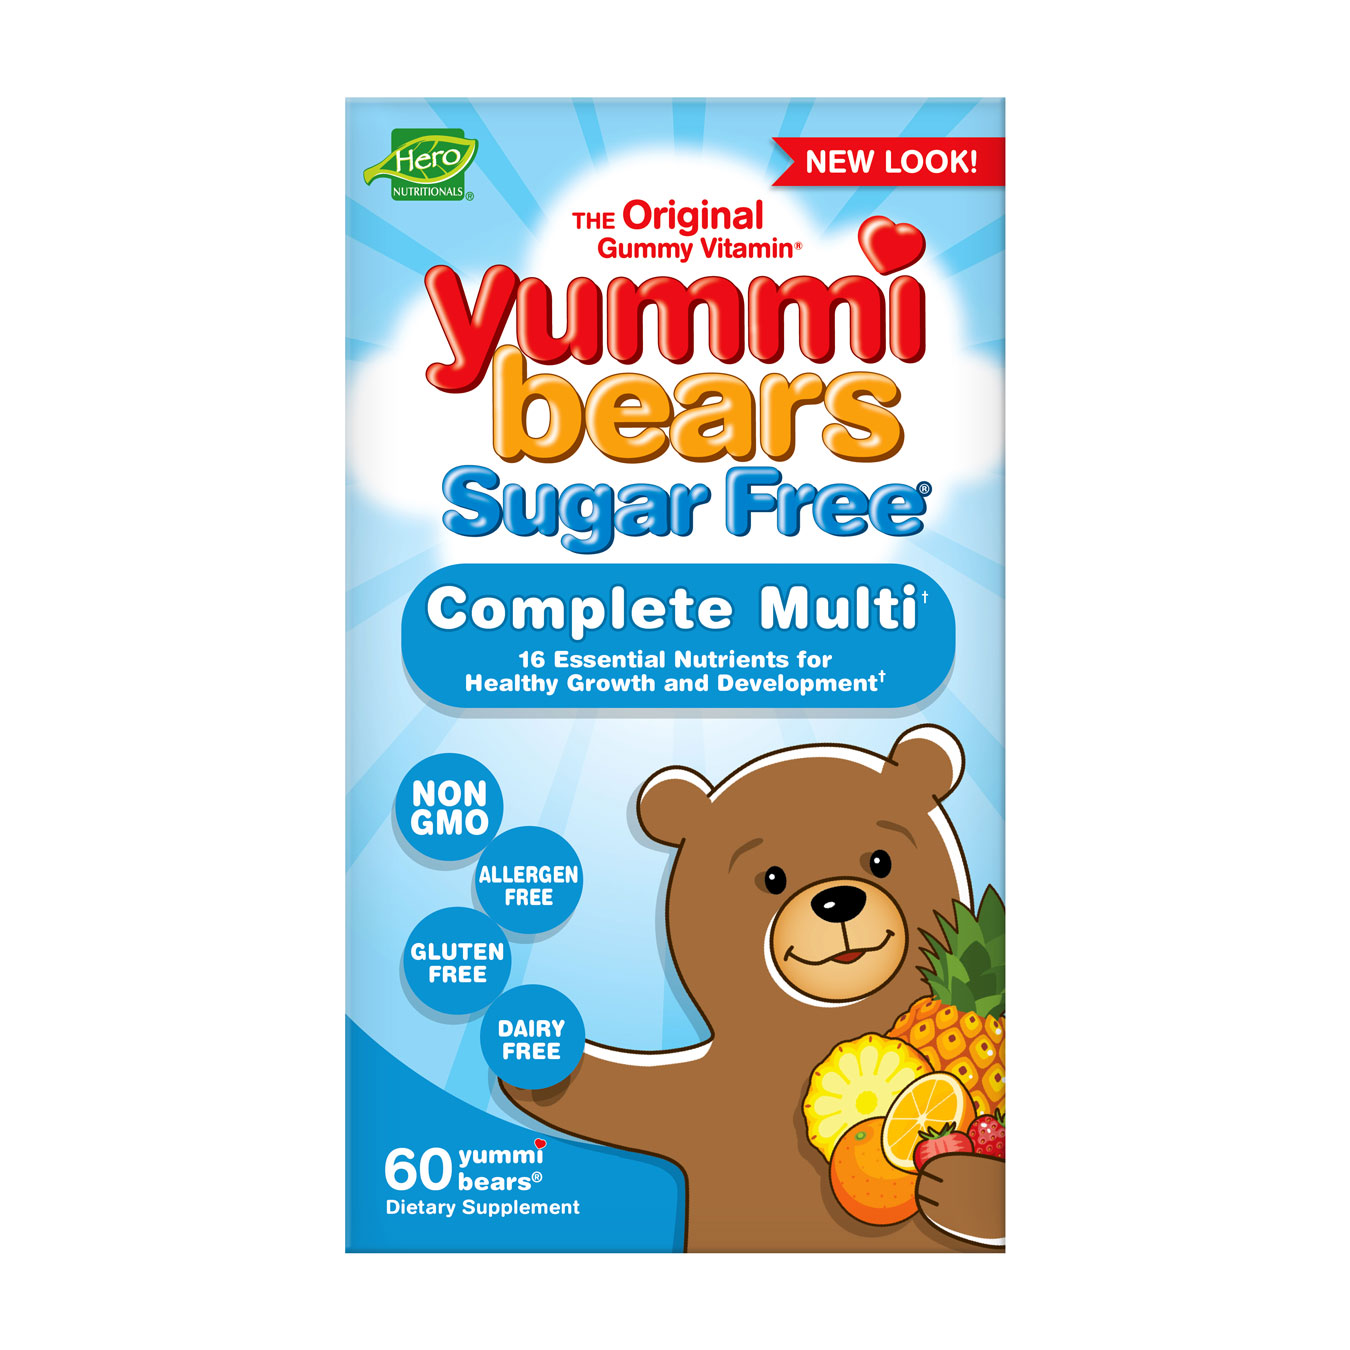 Yummi bears- Sugar Free Multi